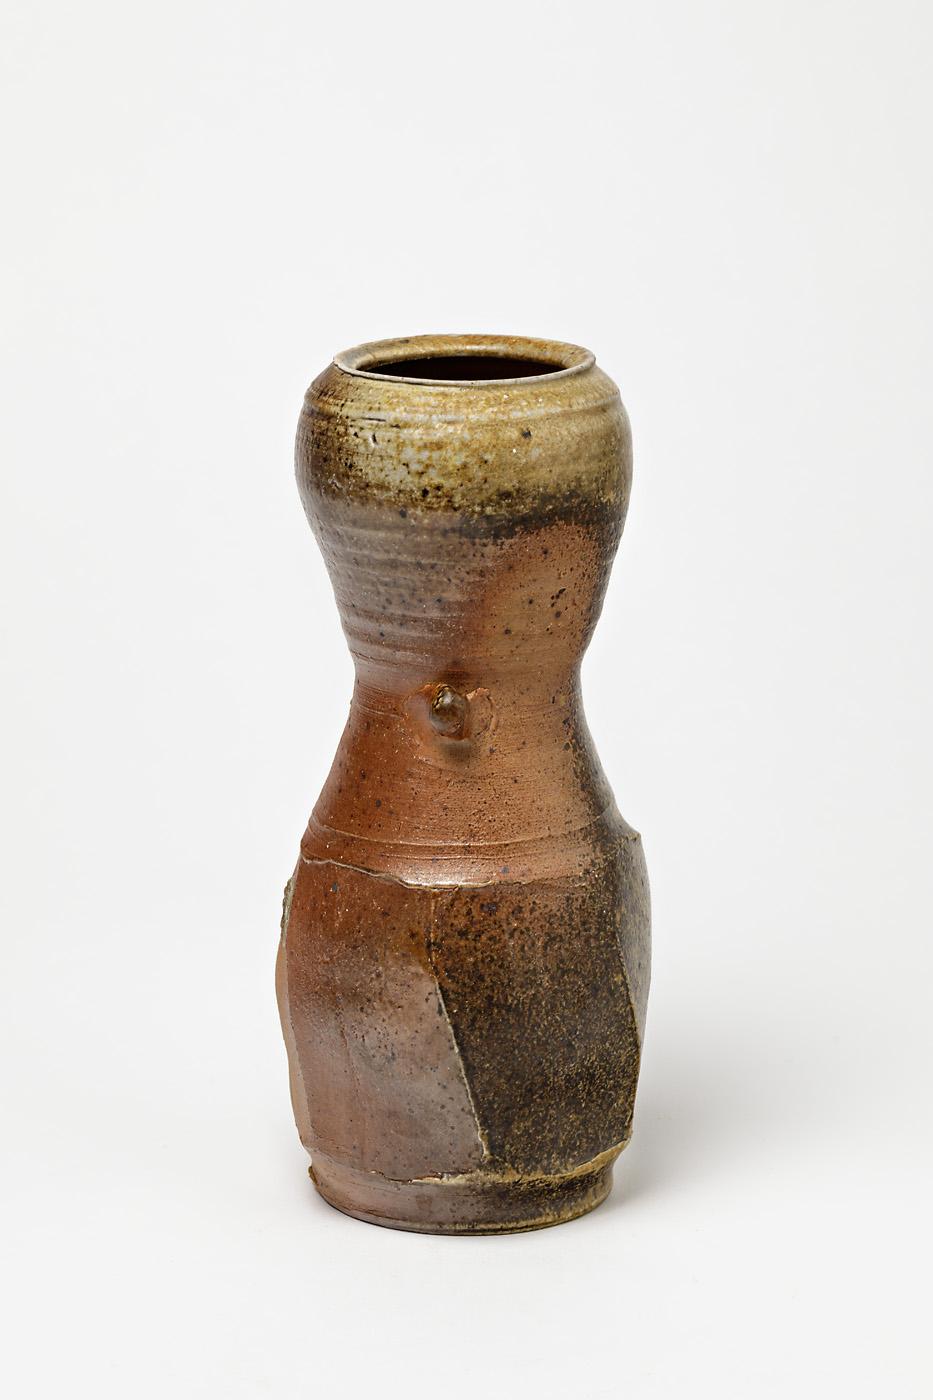 French Decorative Ceramic Vase by Steen Kepp Danish Artist Pottery